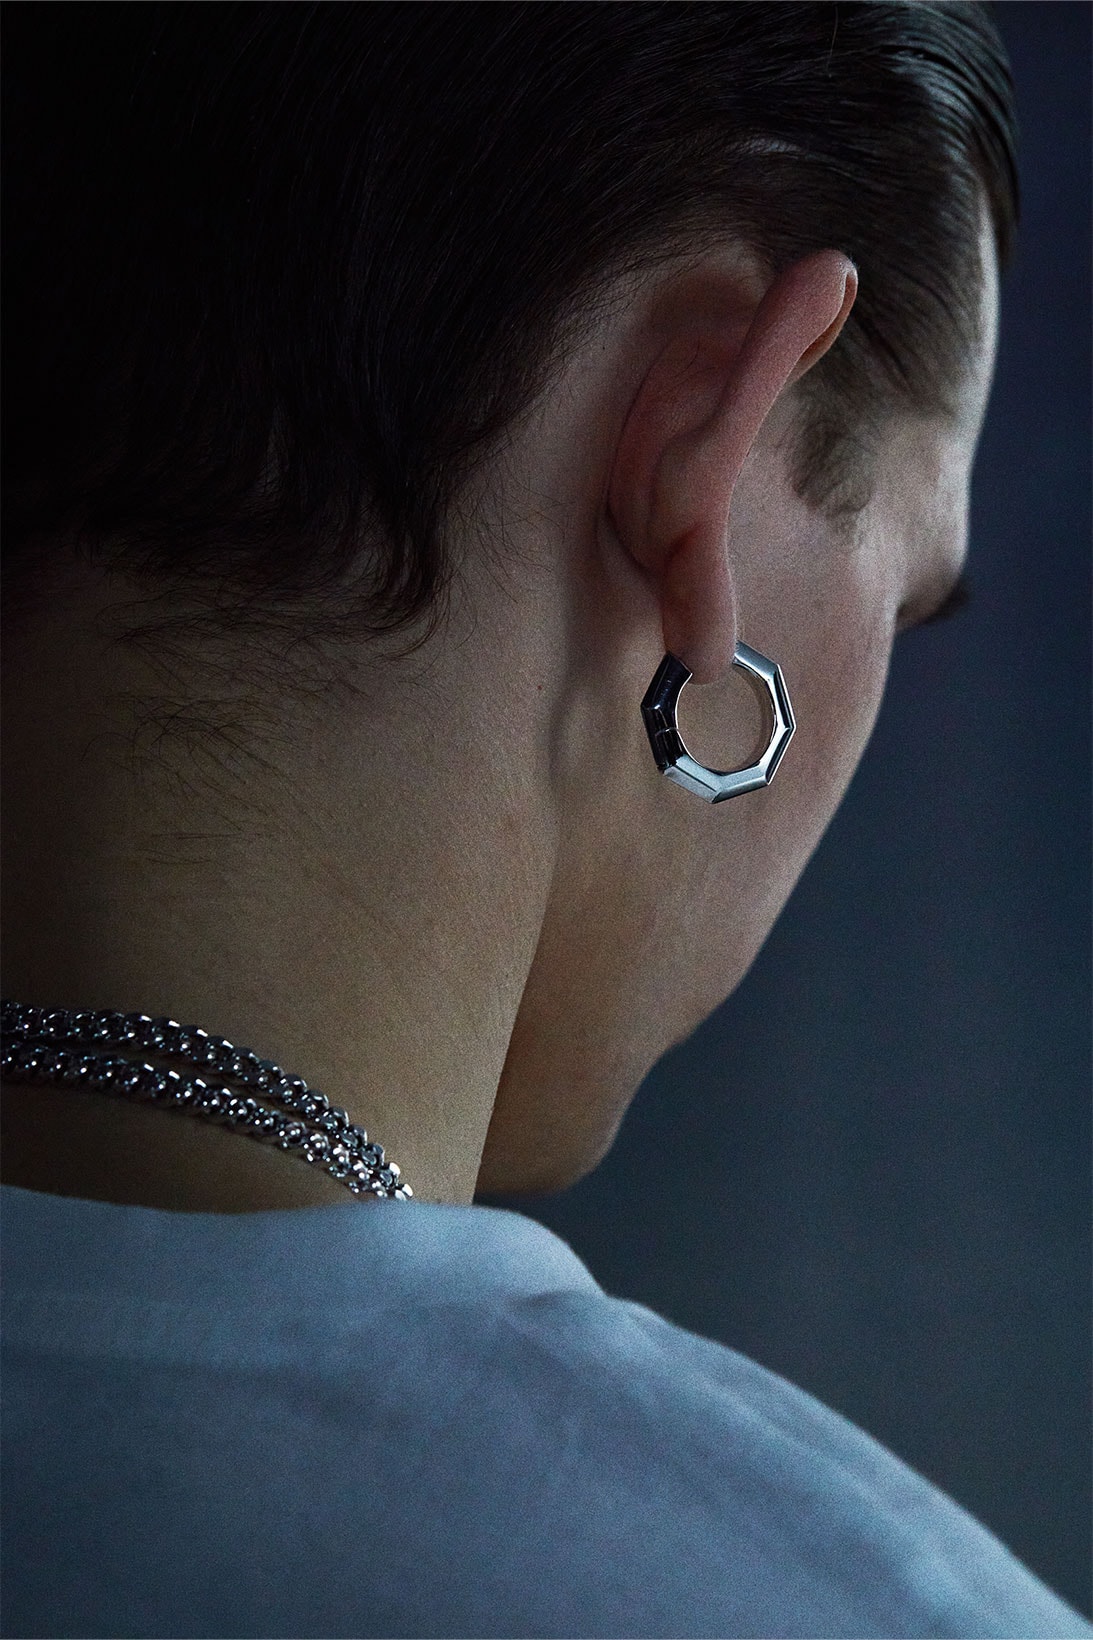 Numbering jewelry earrings hoops silver